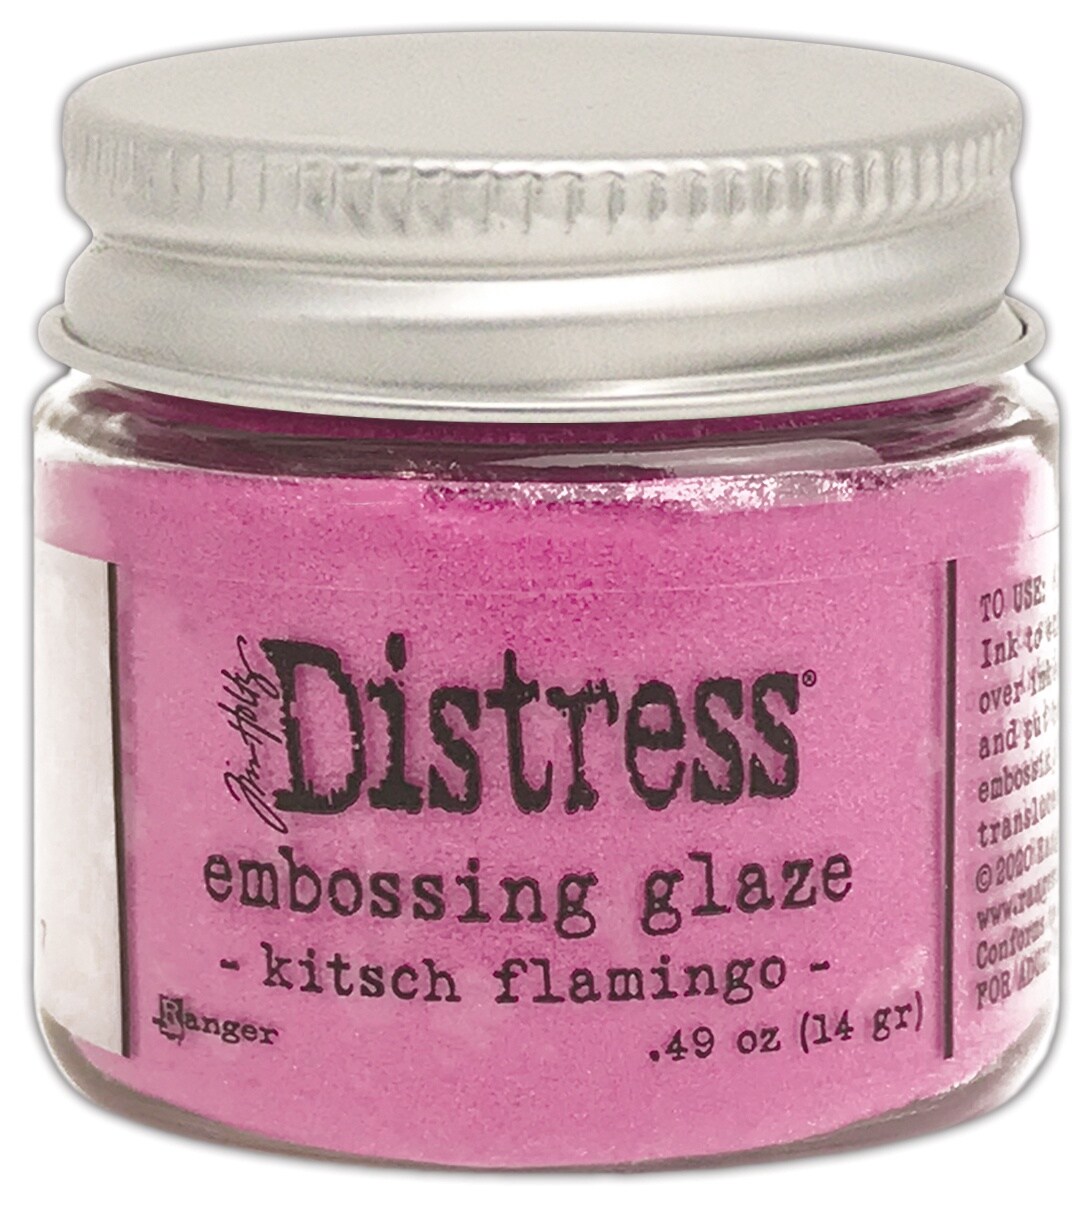 Tim Holtz Distress Embossing Glaze -Kitsch Flamingo